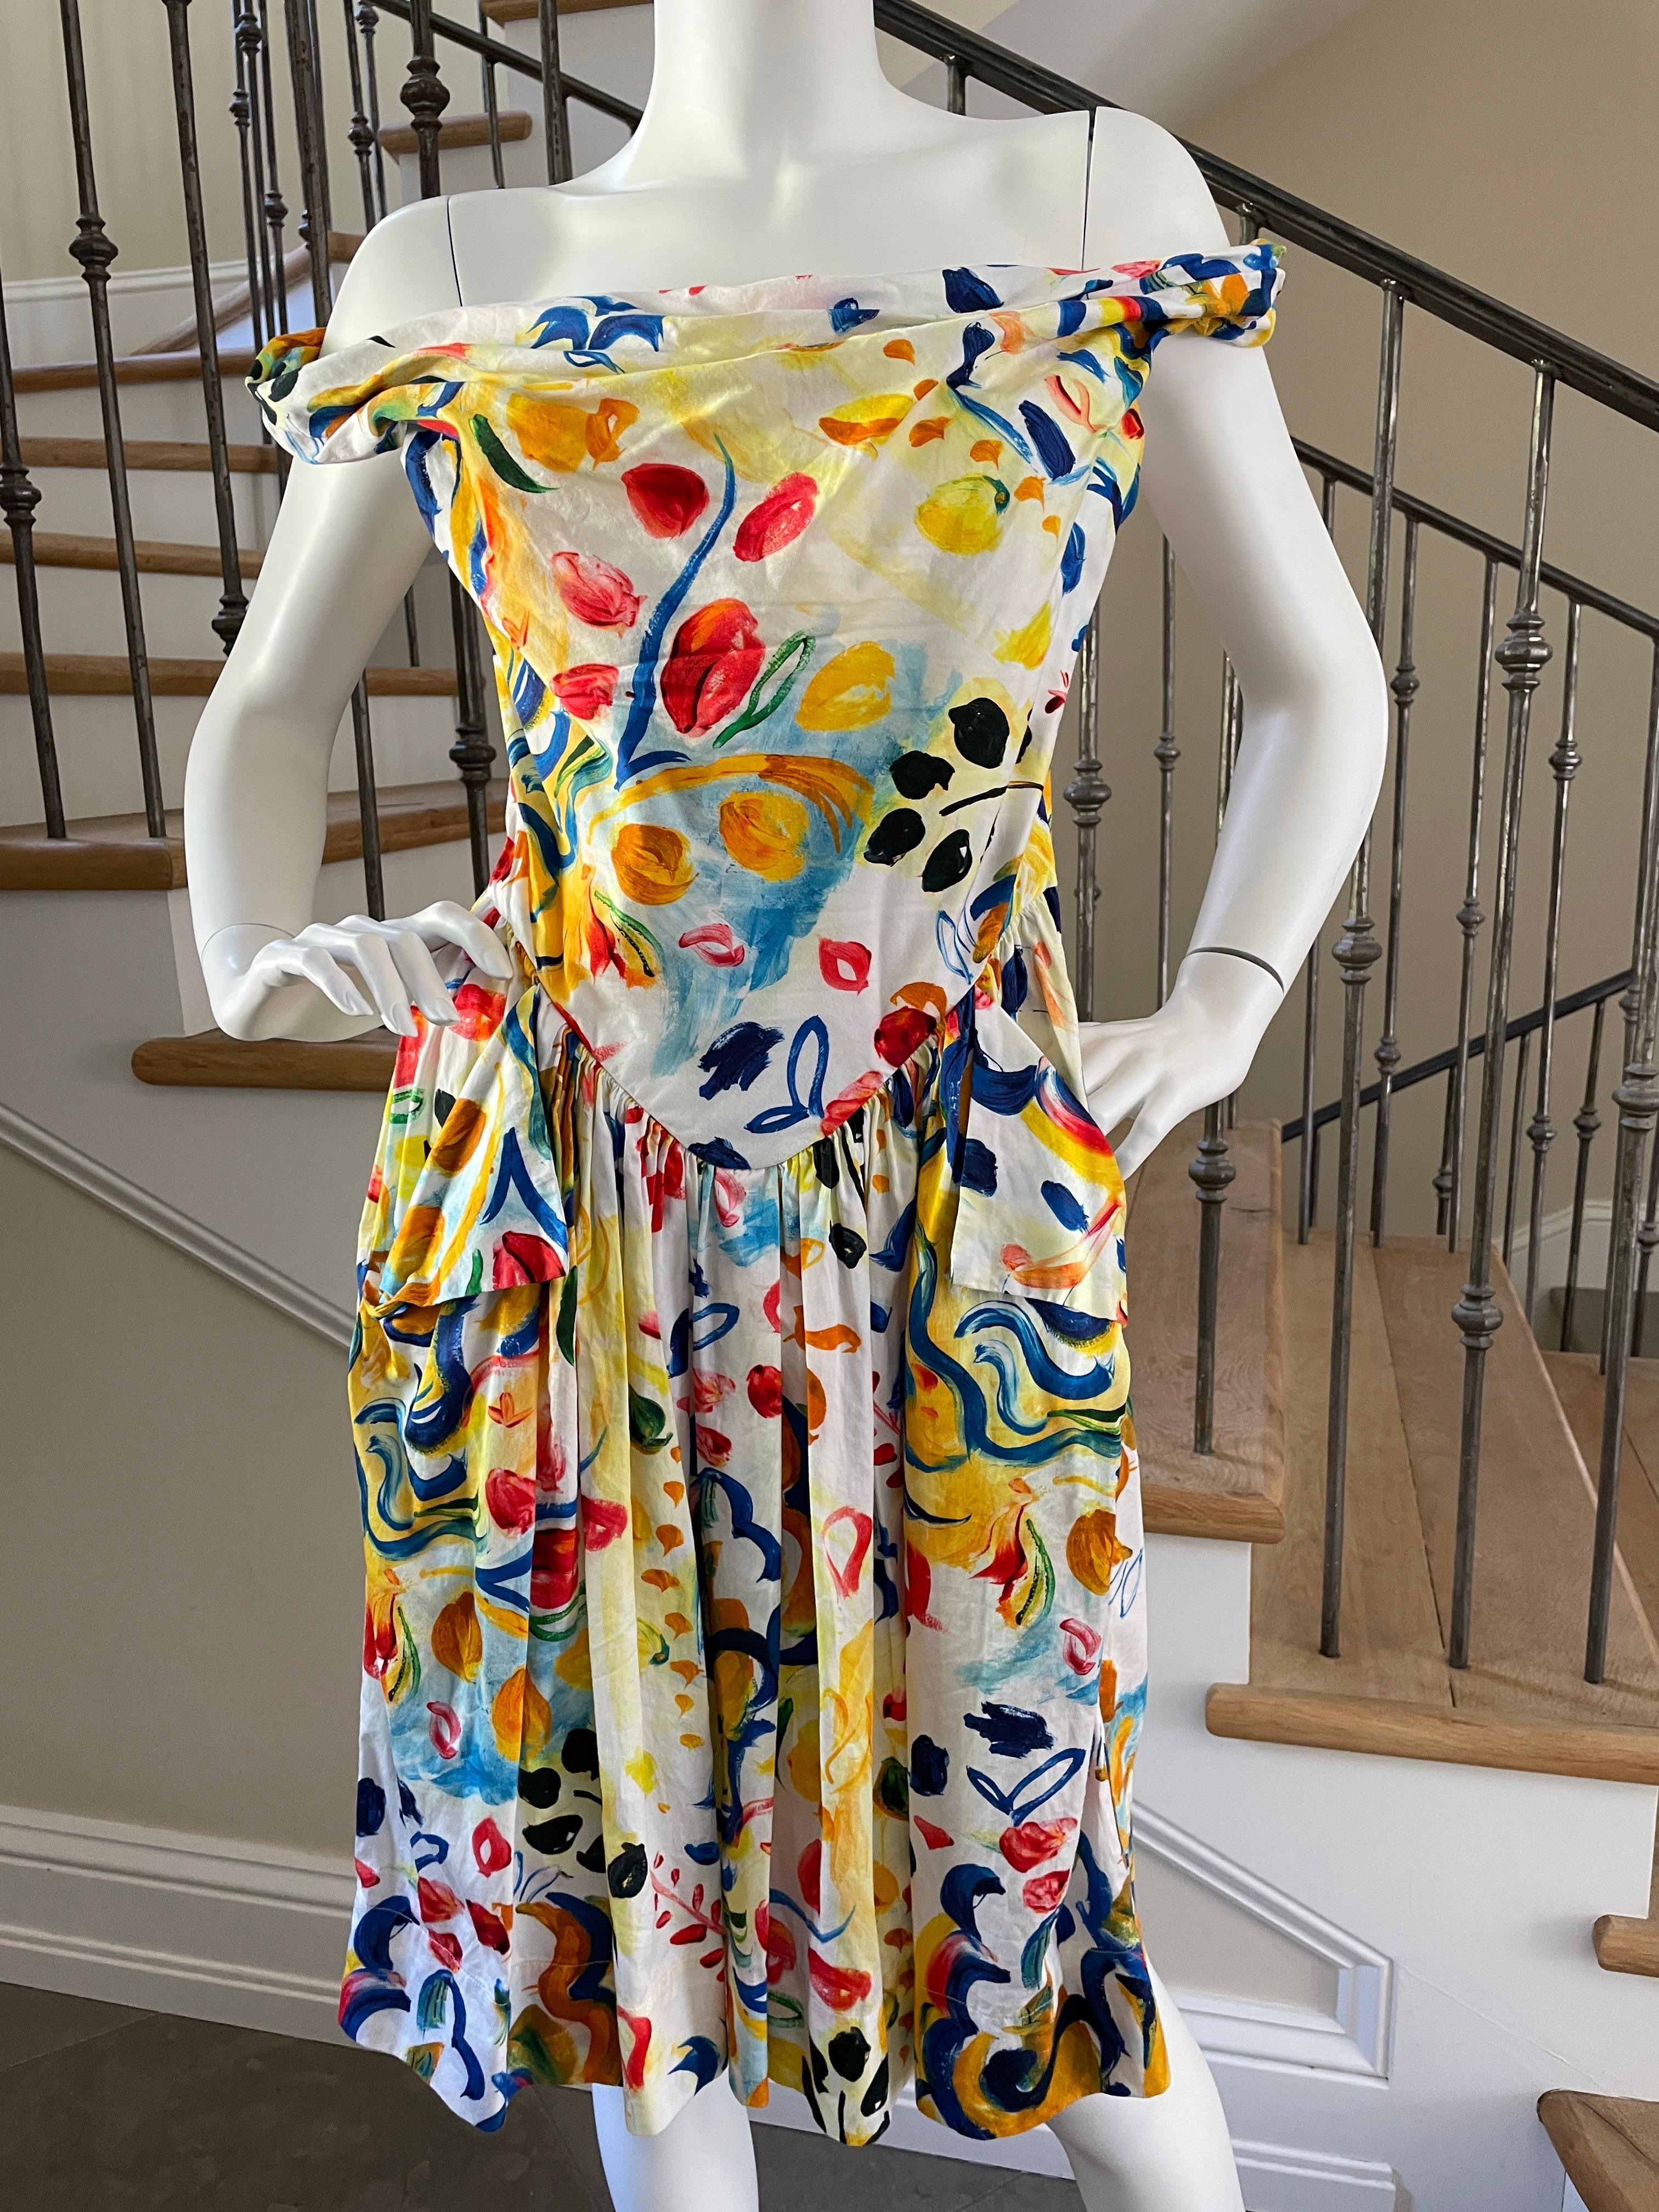 Vivienne Westwood Anglomania Vintage Cotton Floral Off the Shoulder Dress
Size 44
Bust 36